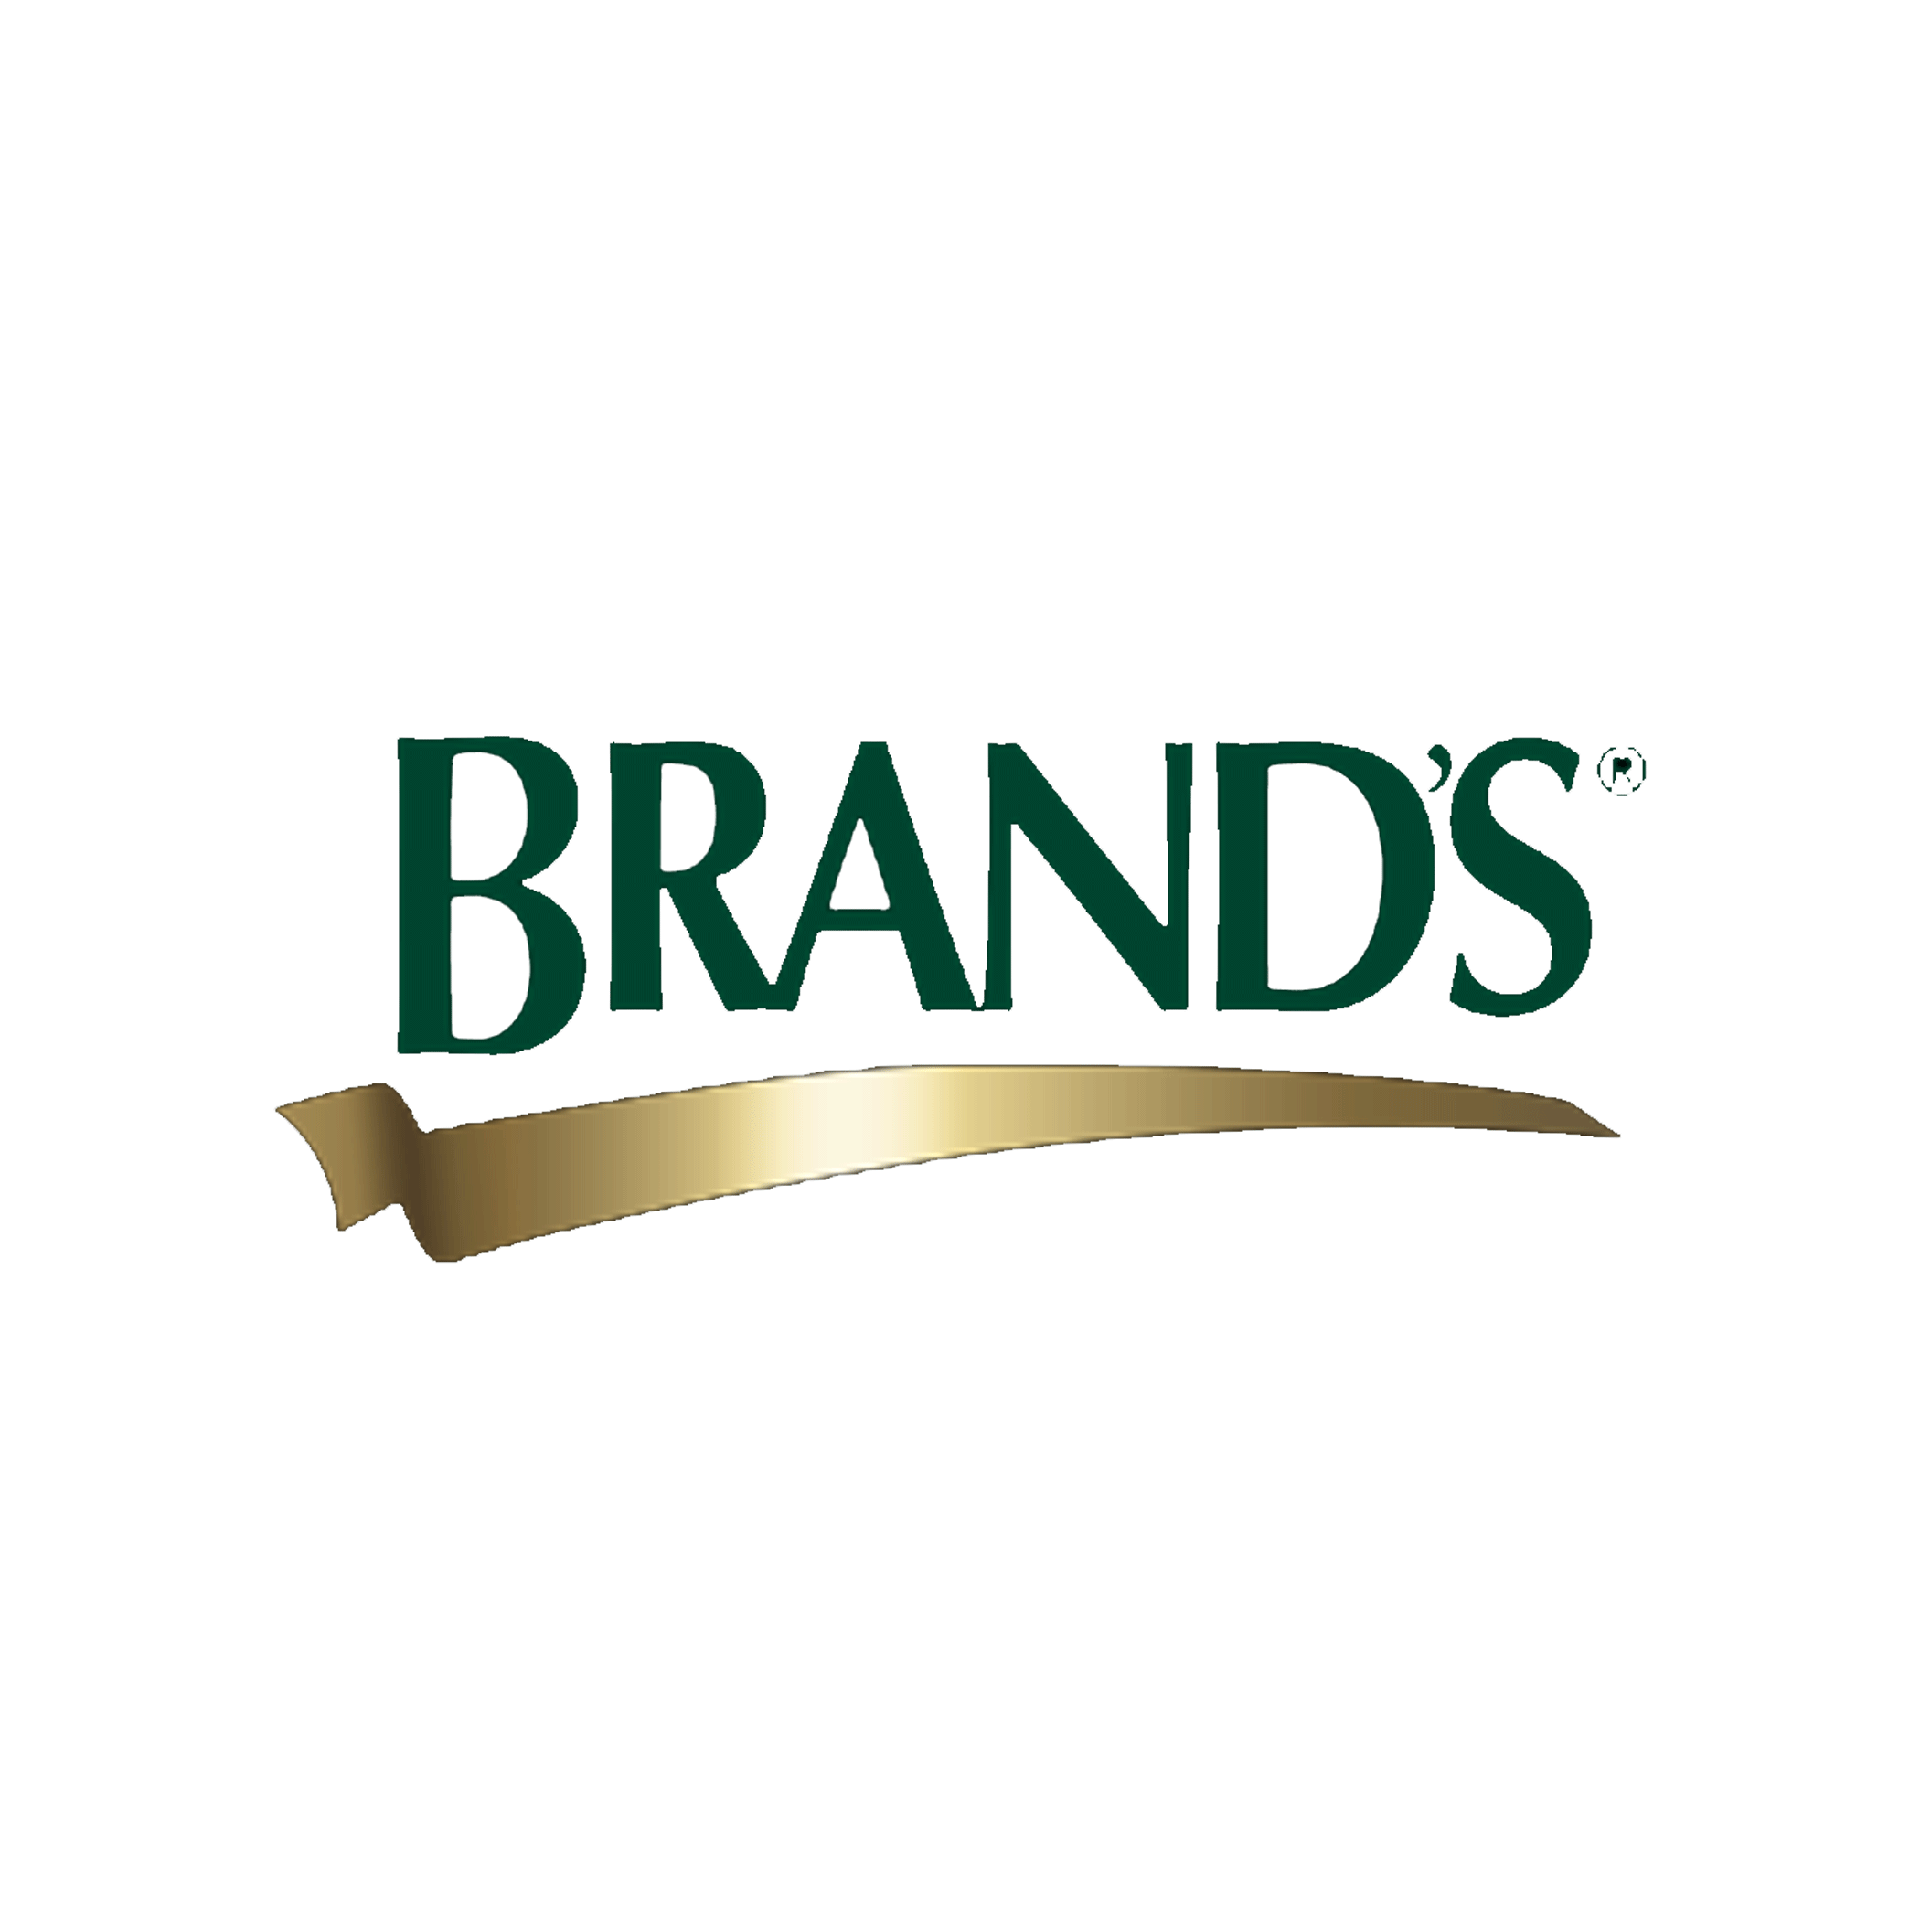 Product Brand: Brand's